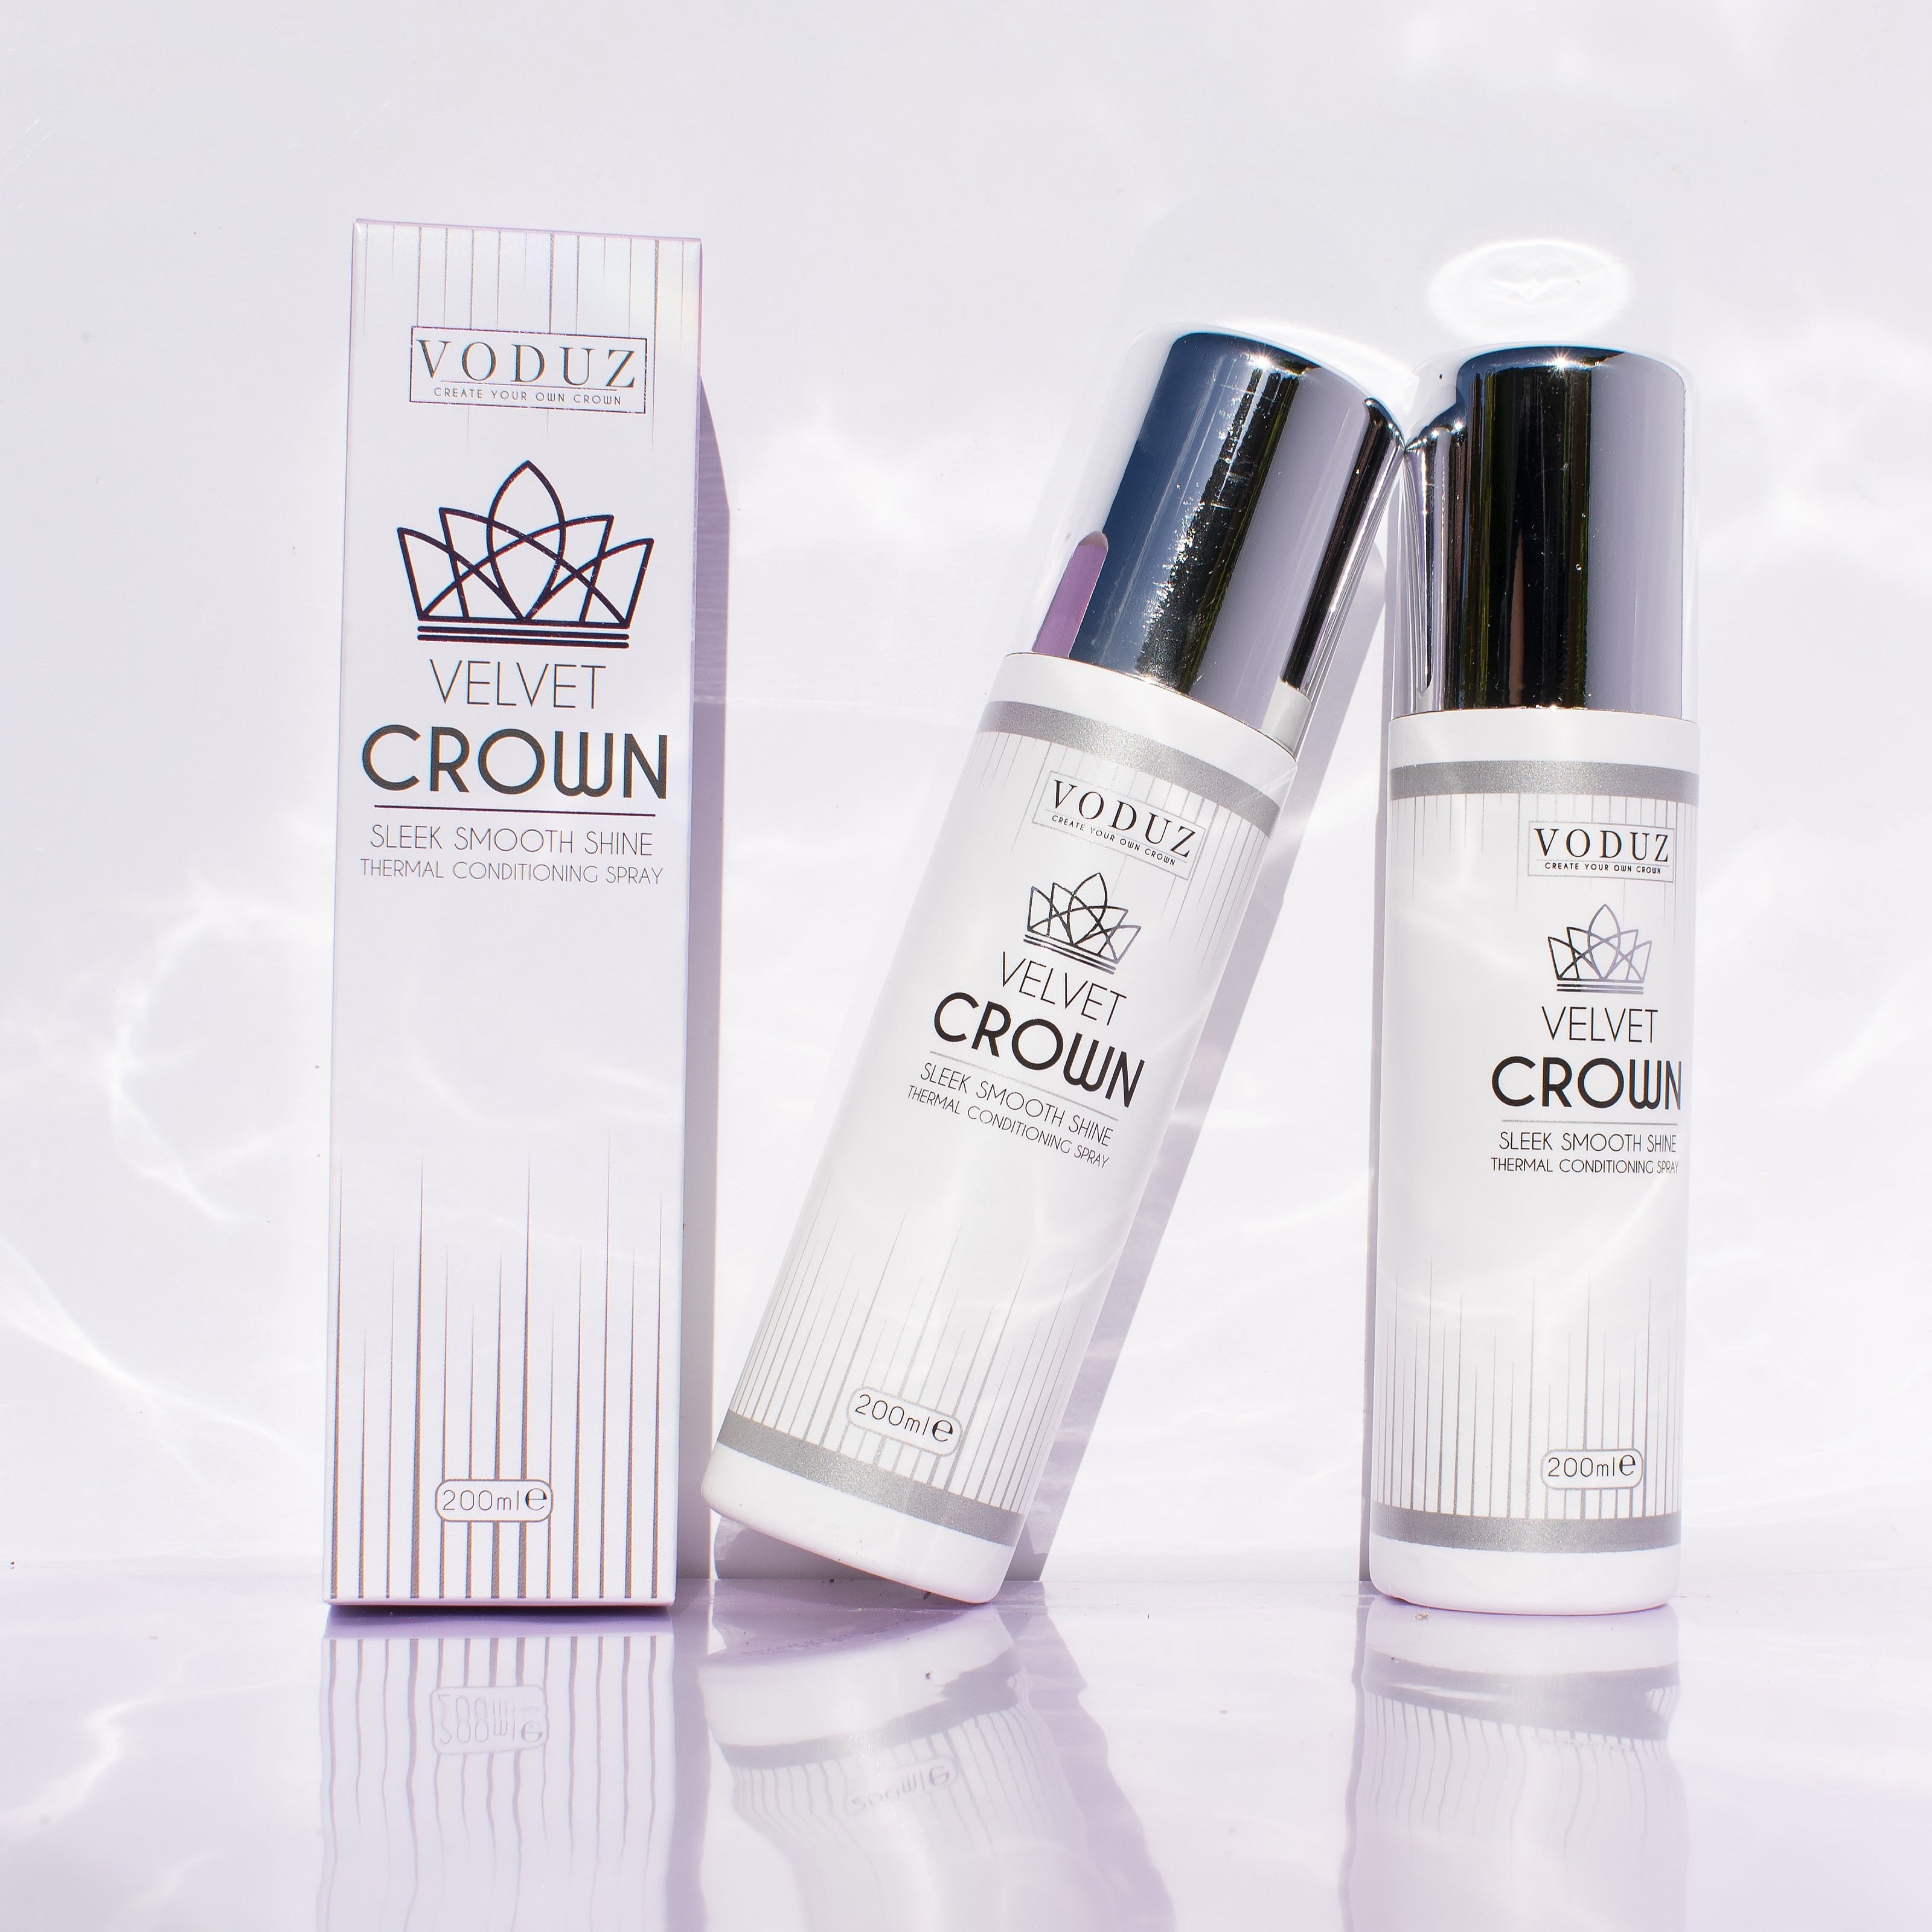 VODUZ Velvet Crown – Thermal Conditioning Spray, packaging